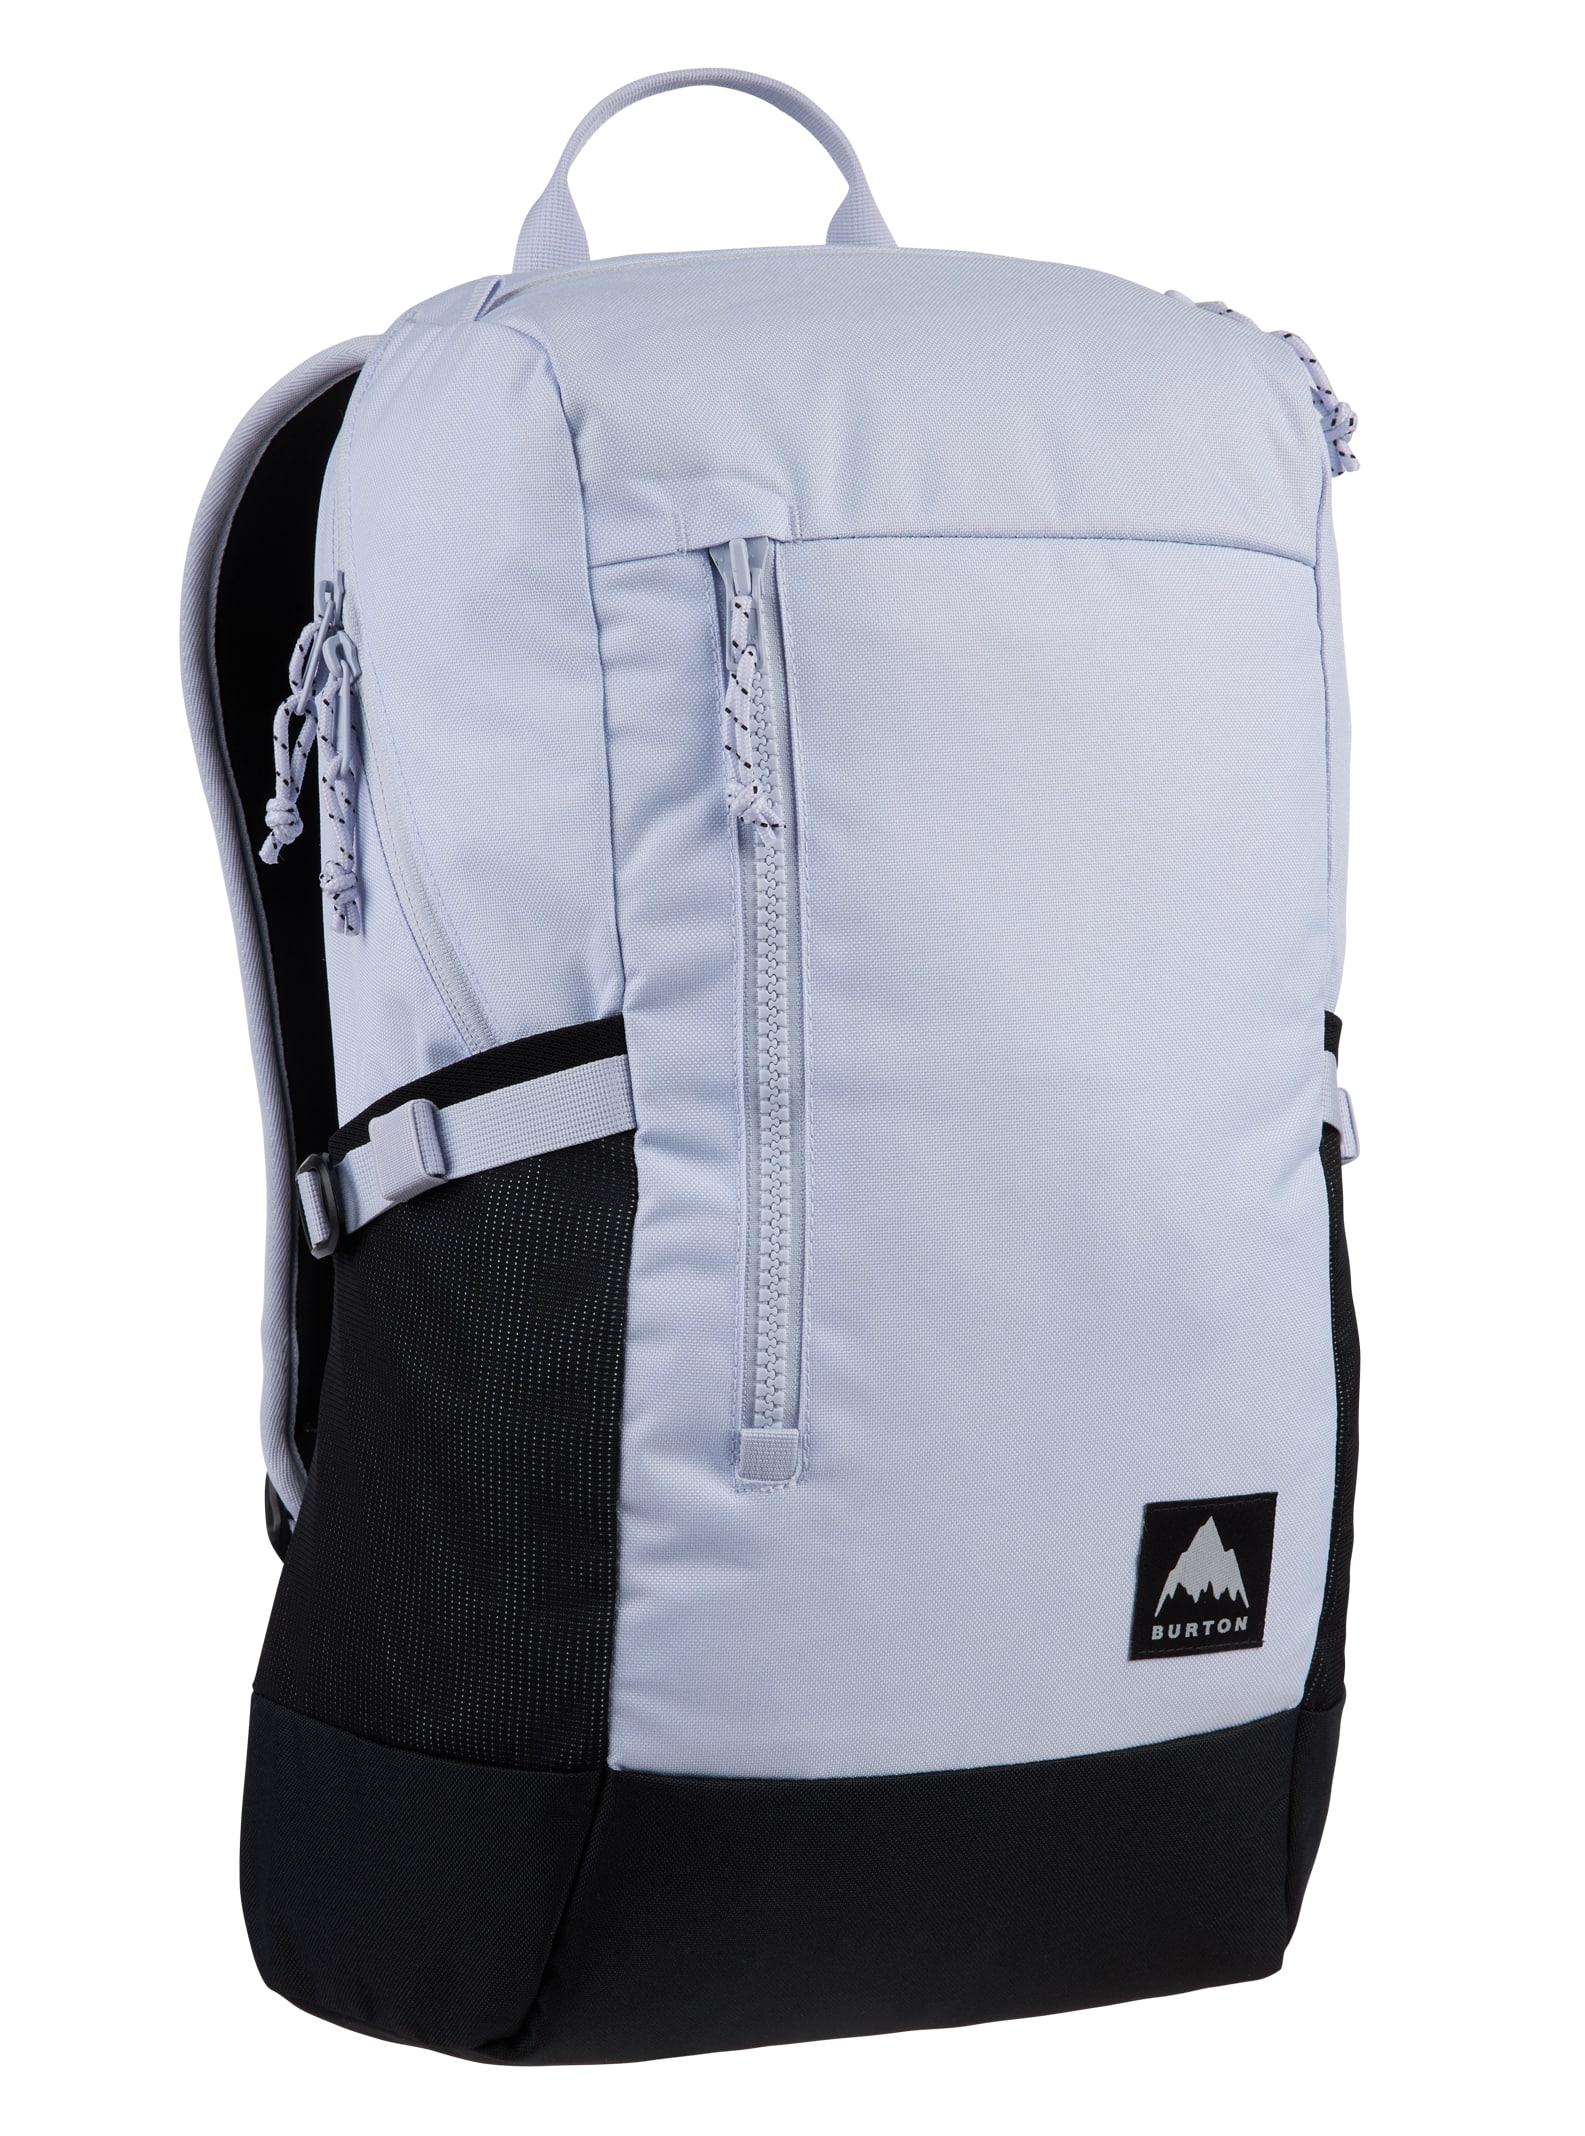 Backpacks | Burton Snowboards GB